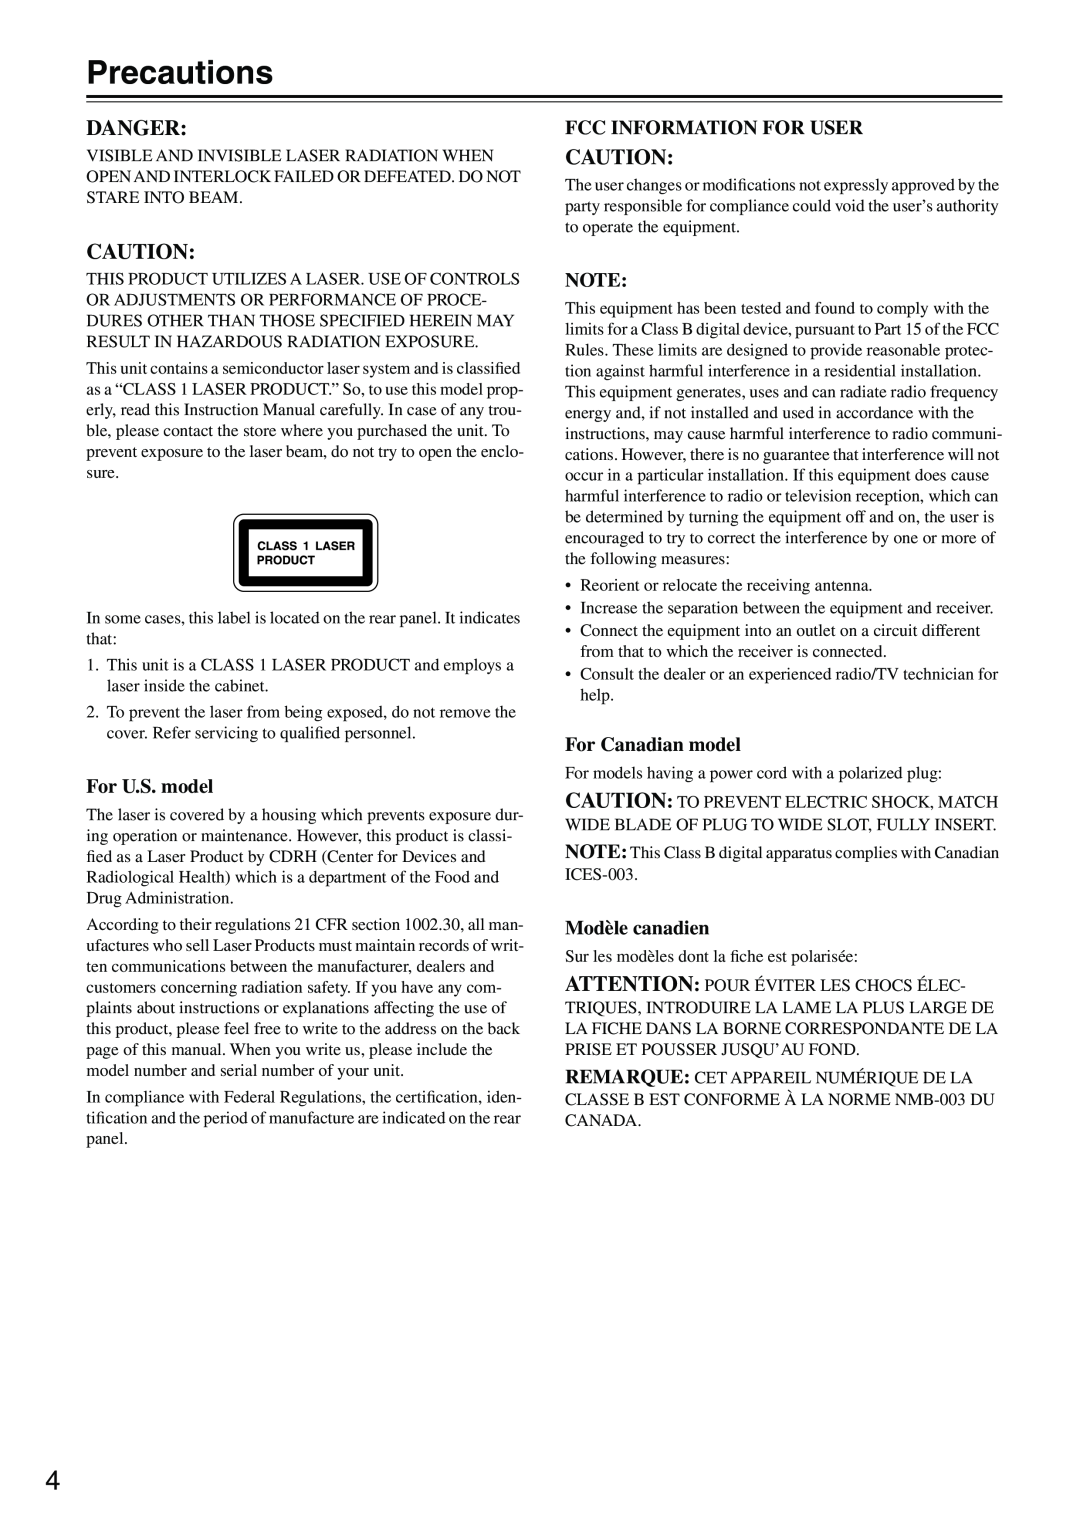 Onkyo DV-CP701 Precautions, Danger, For U.S. model, Fcc Information For User, For Canadian model, Modèle canadien 